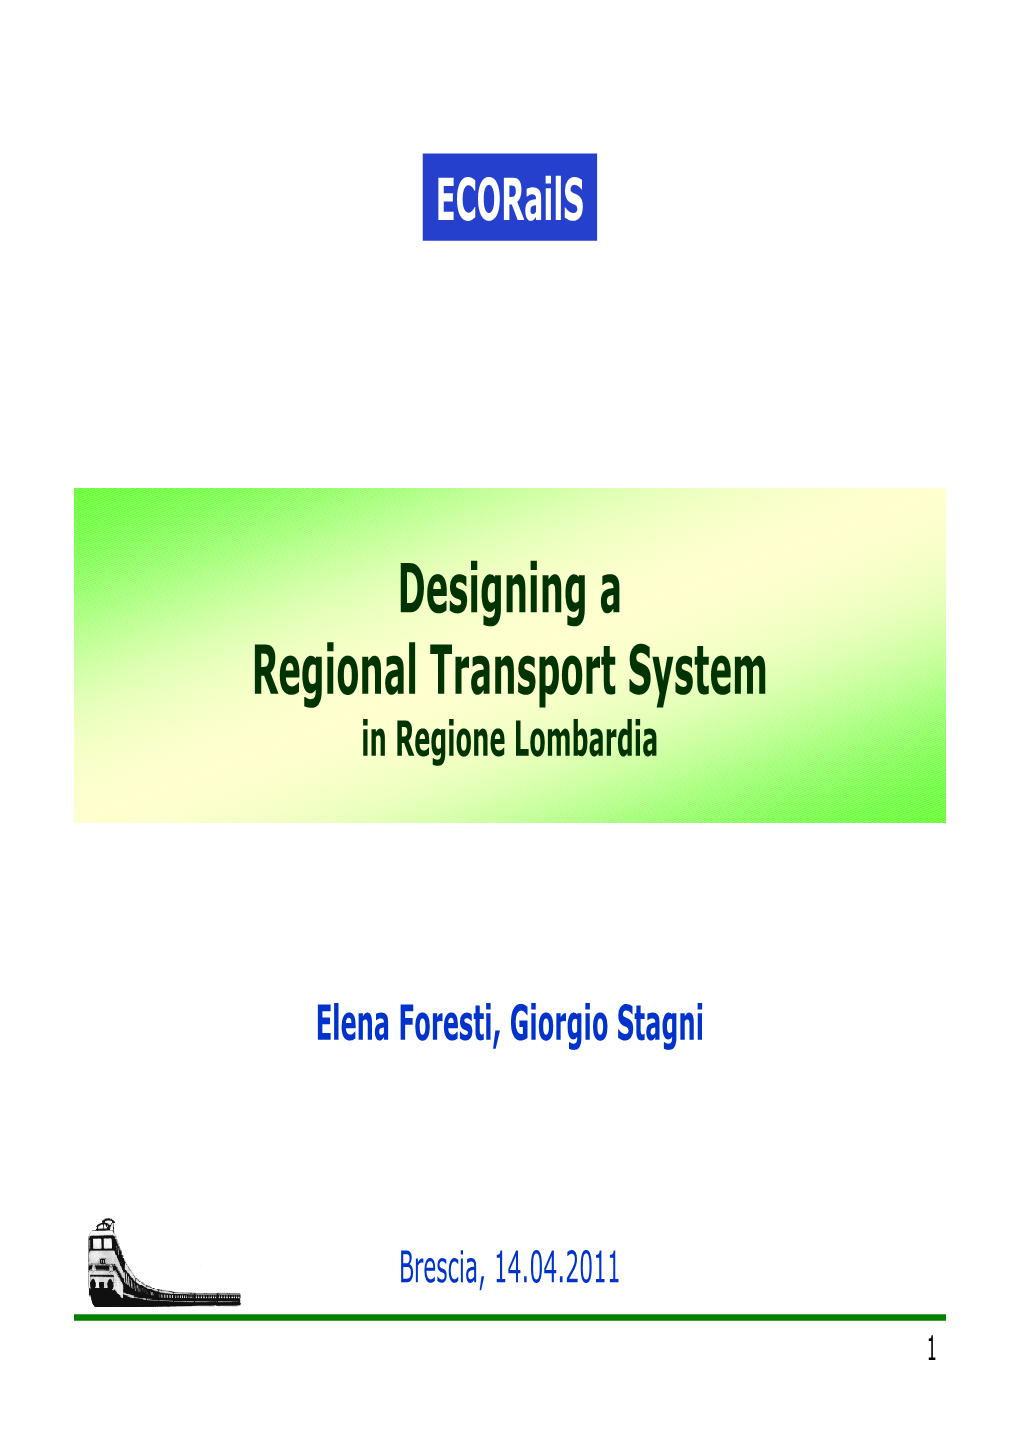 Designing a Regional Transport System in Regione Lombardia